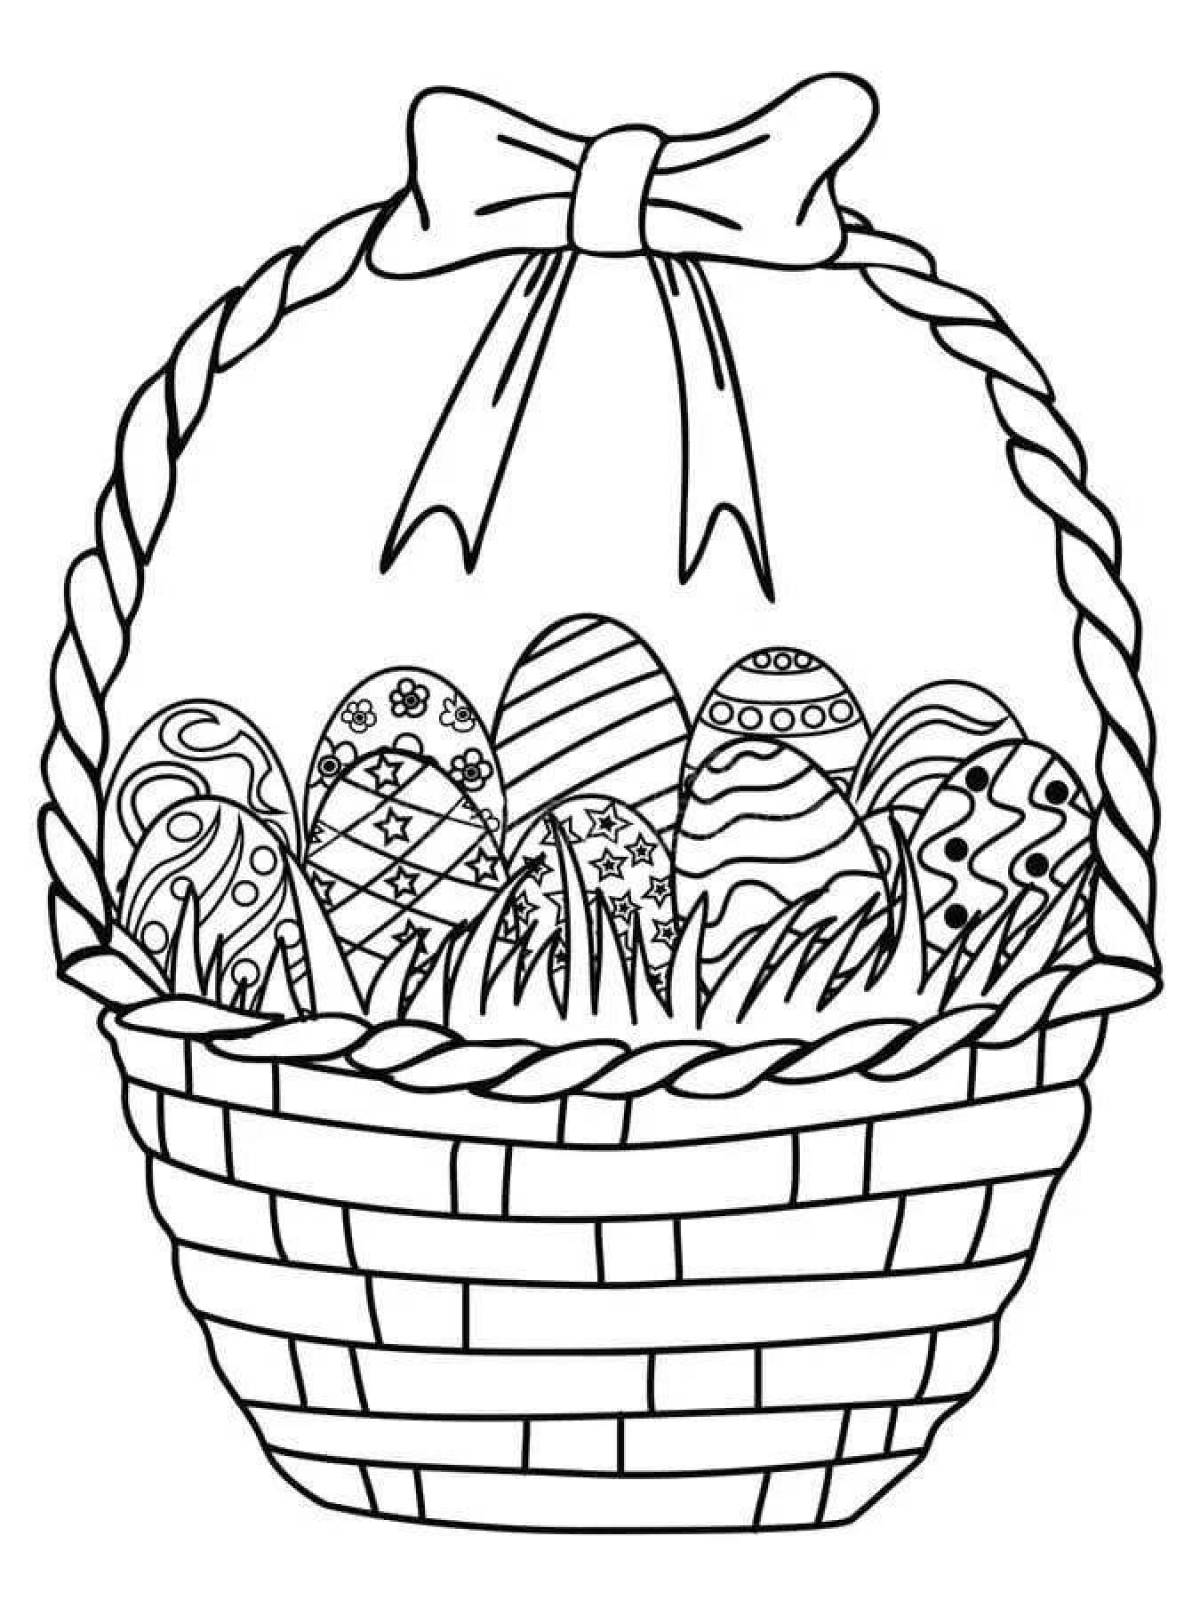 A living basket of fir cones